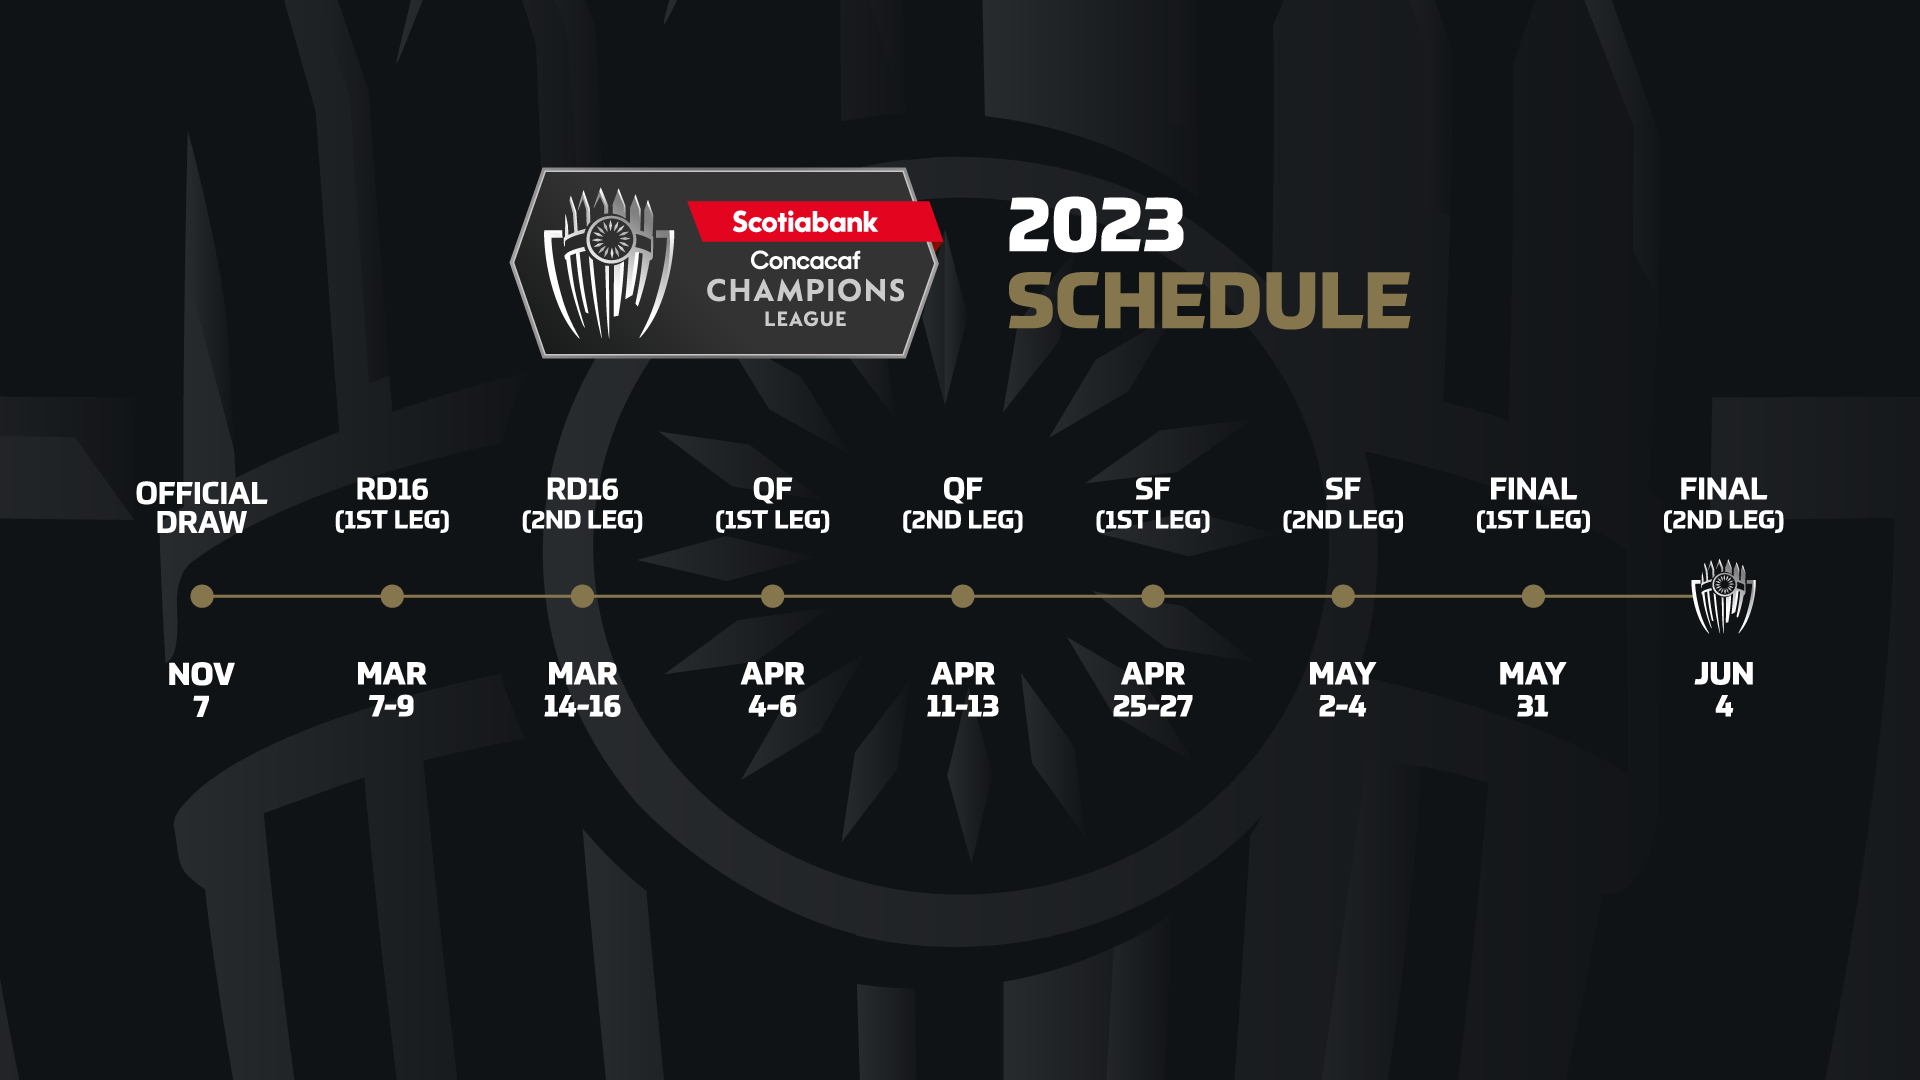 Concacaf announces details for 2023 Scotiabank Concacaf Champions League